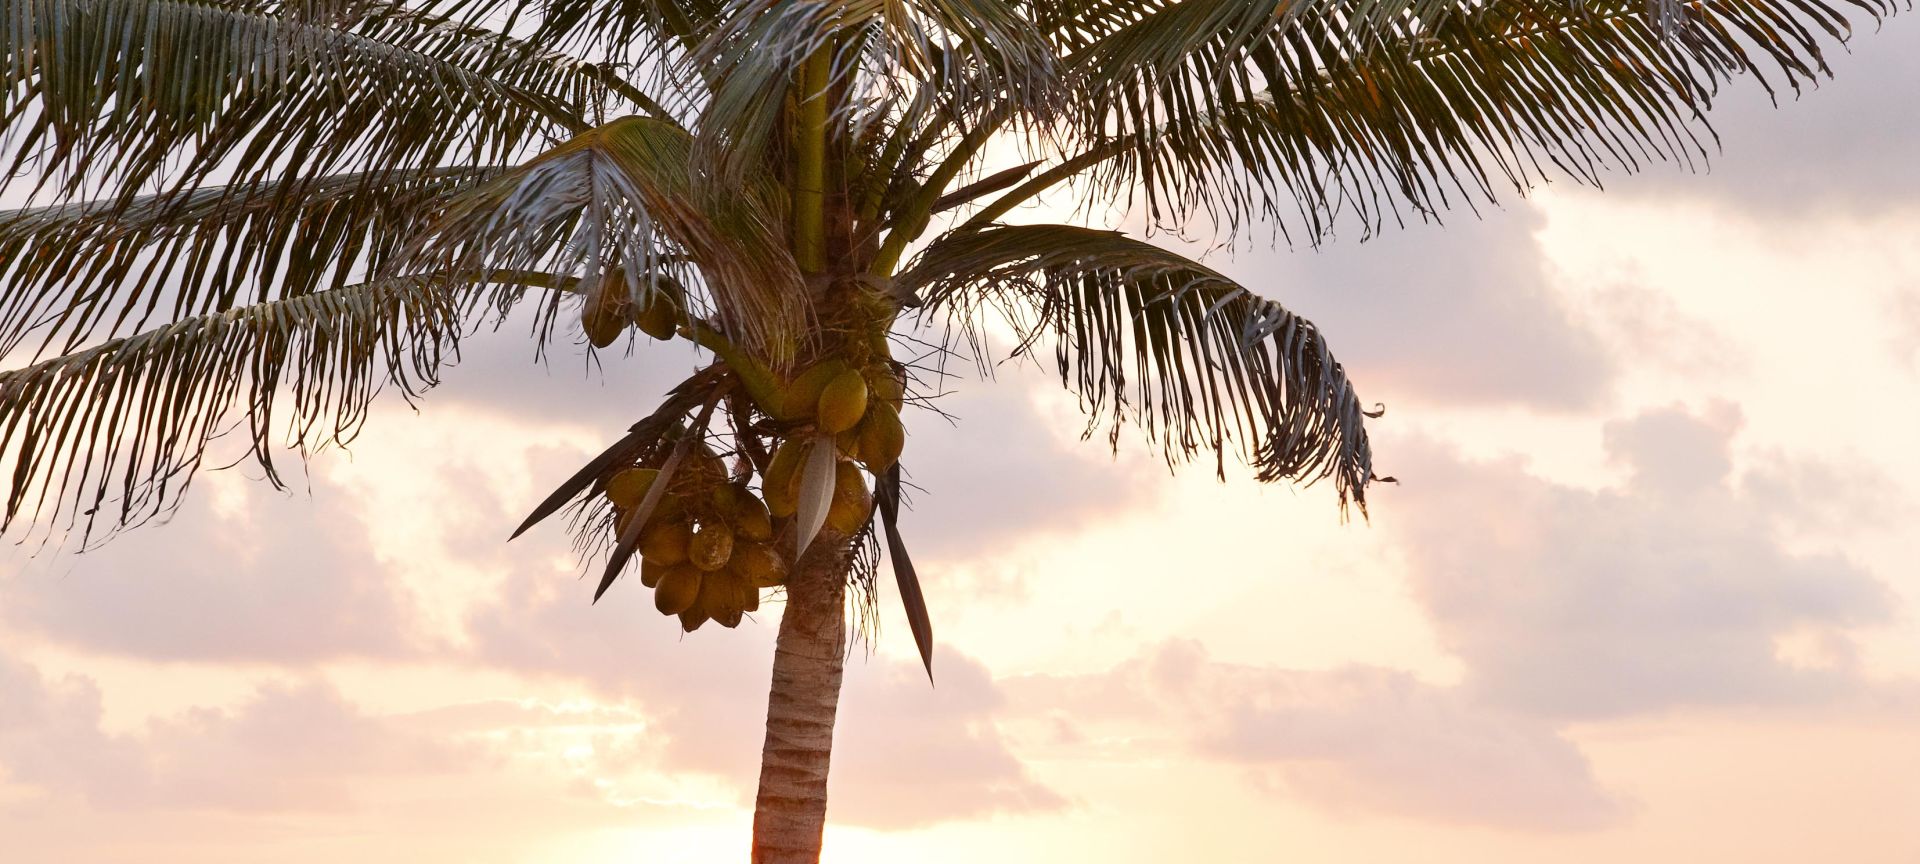 A Beach With A Palm Tree